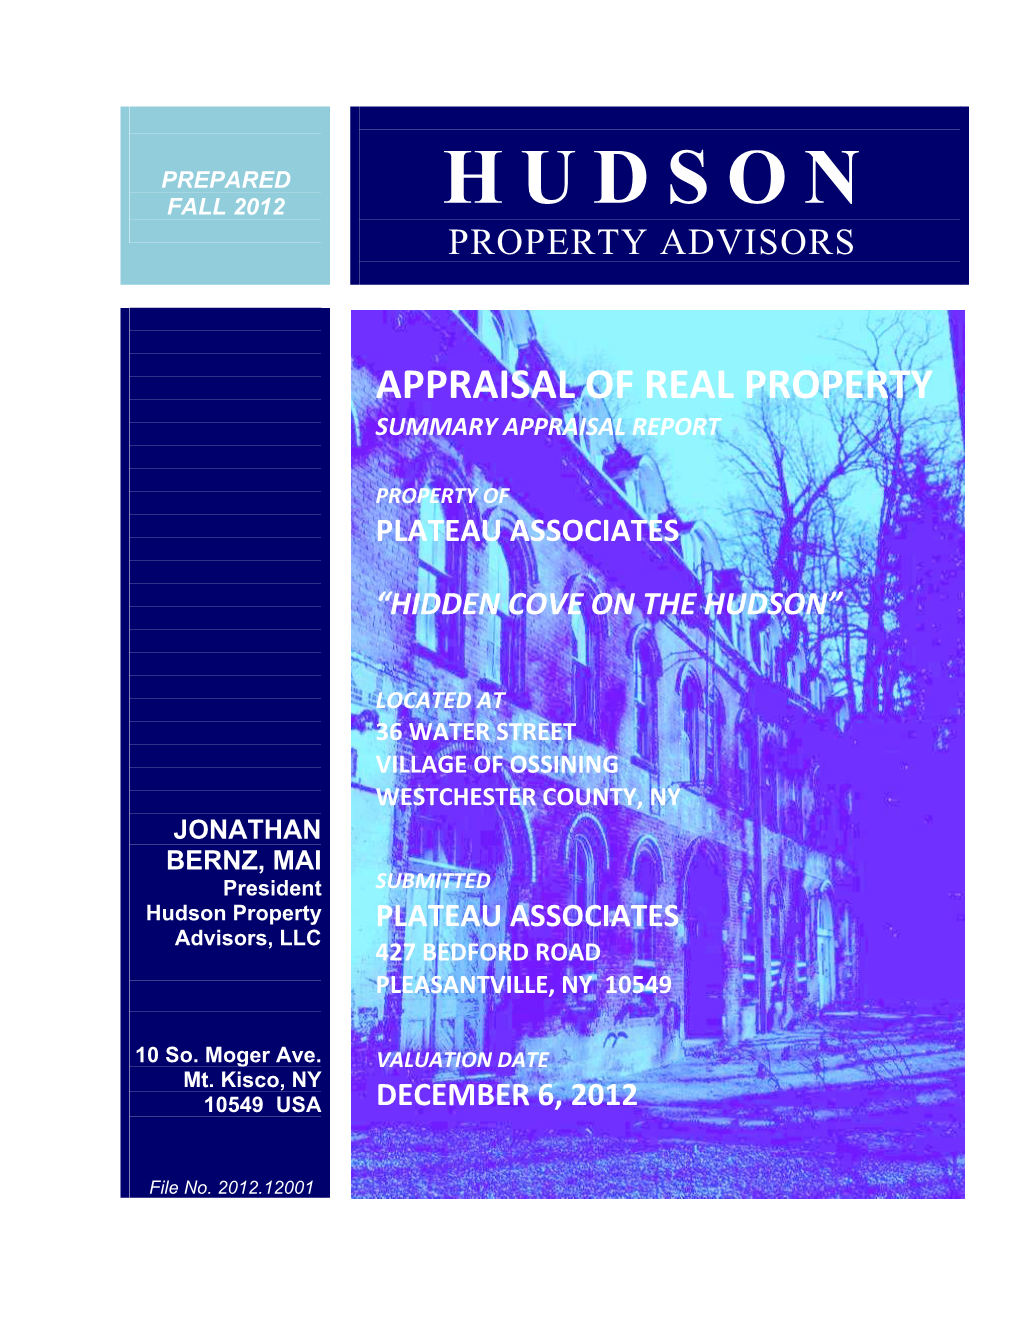 5.5 Appraisal by Hudson Property Advisors